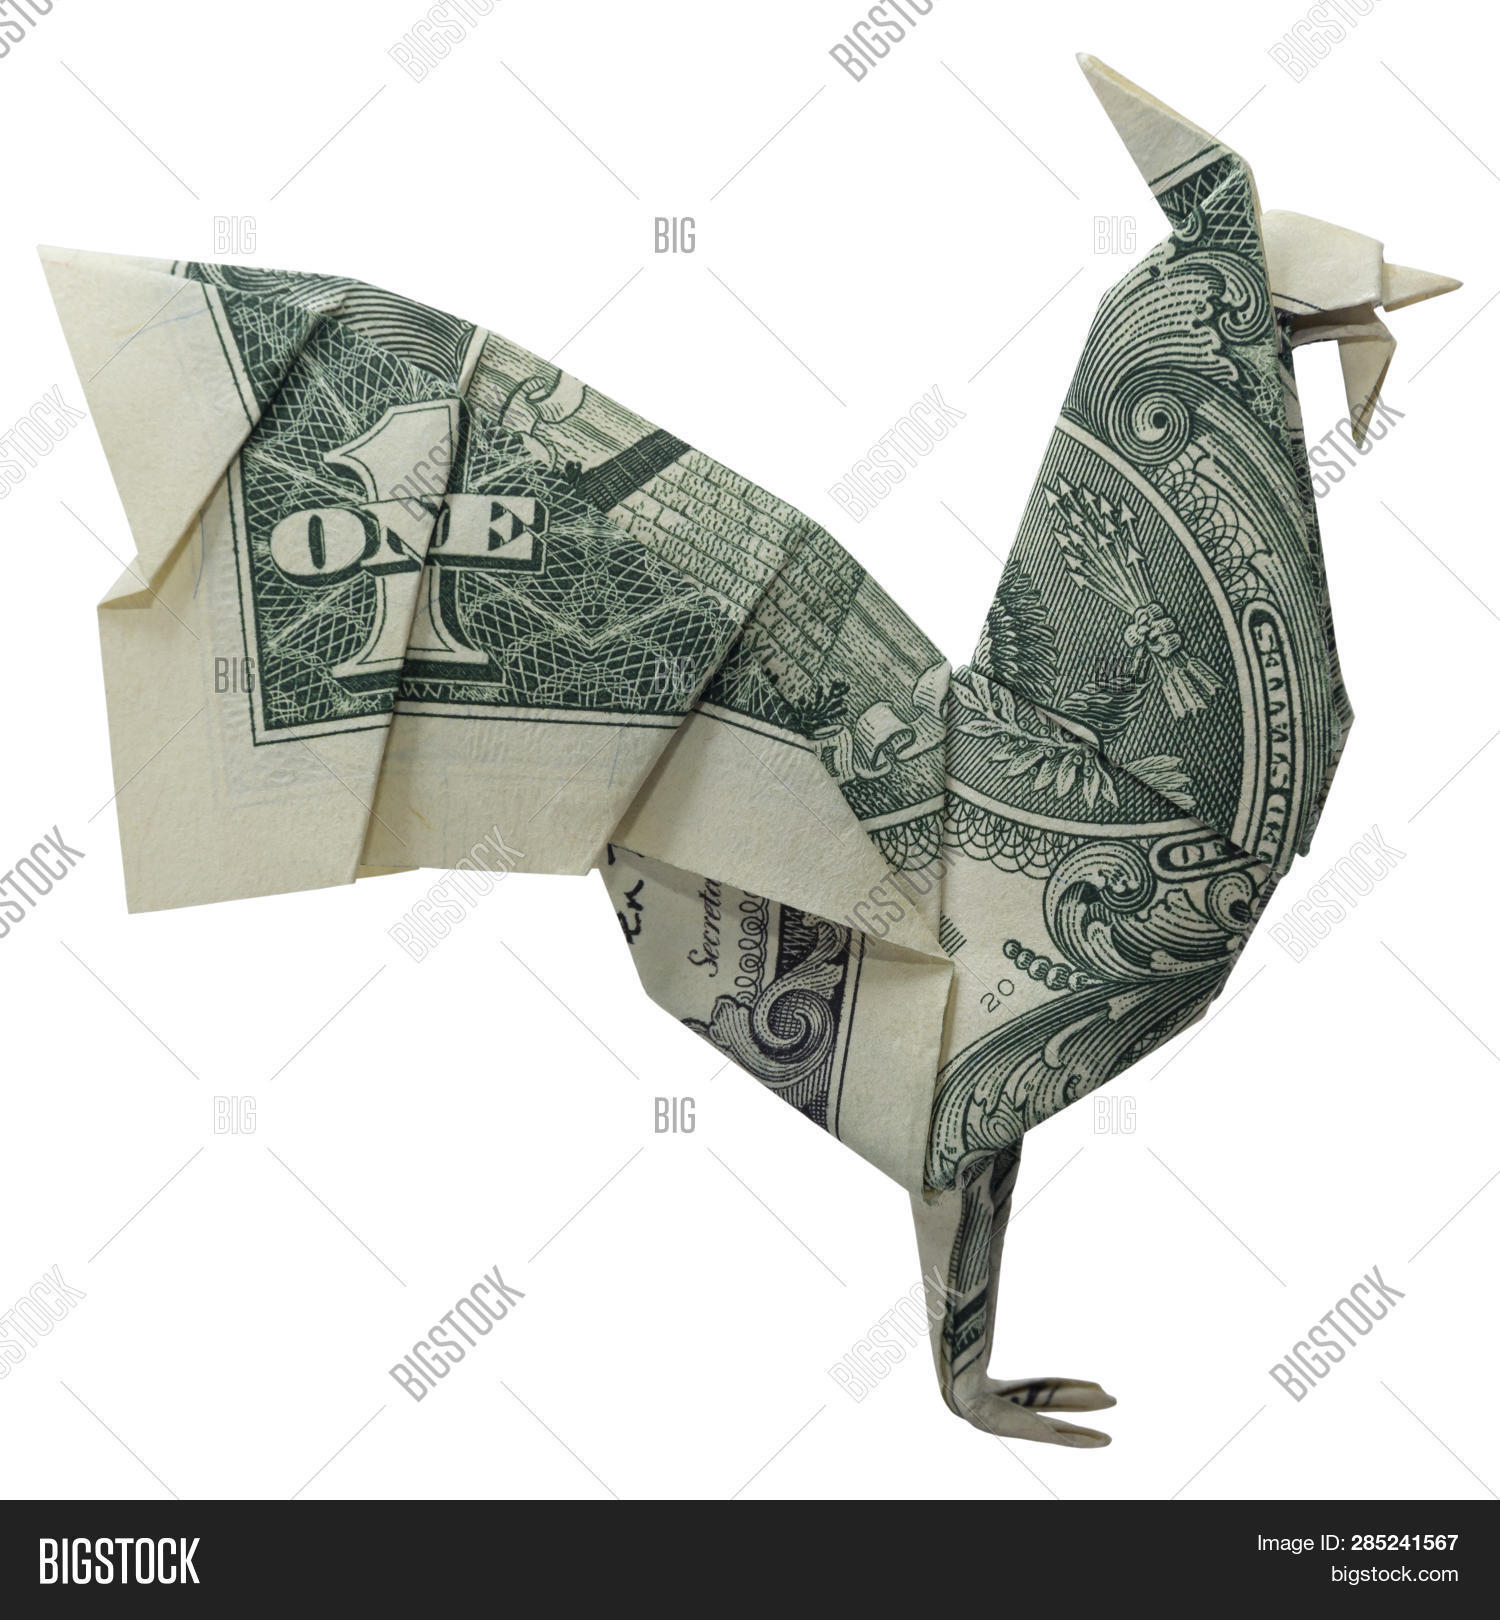 Origami Money Bird Money Origami Rooster Image Photo Free Trial Bigstock